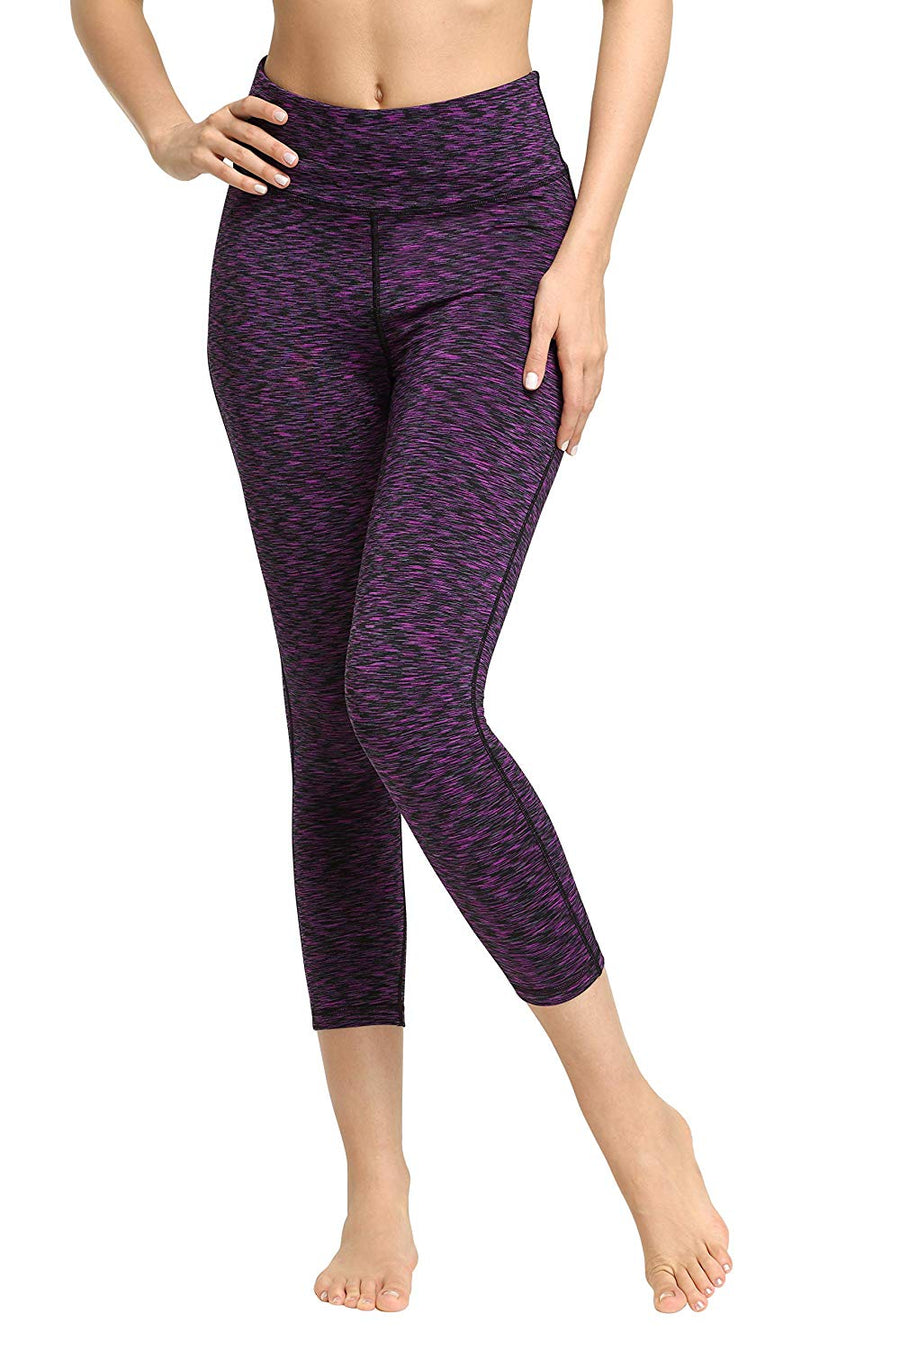 HAPIMO Savings Women's Yoga Flare Pants Workout Pants Slimming Stretch  Athletic Tummy Control Running Yoga Leggings for Women Purple XL 